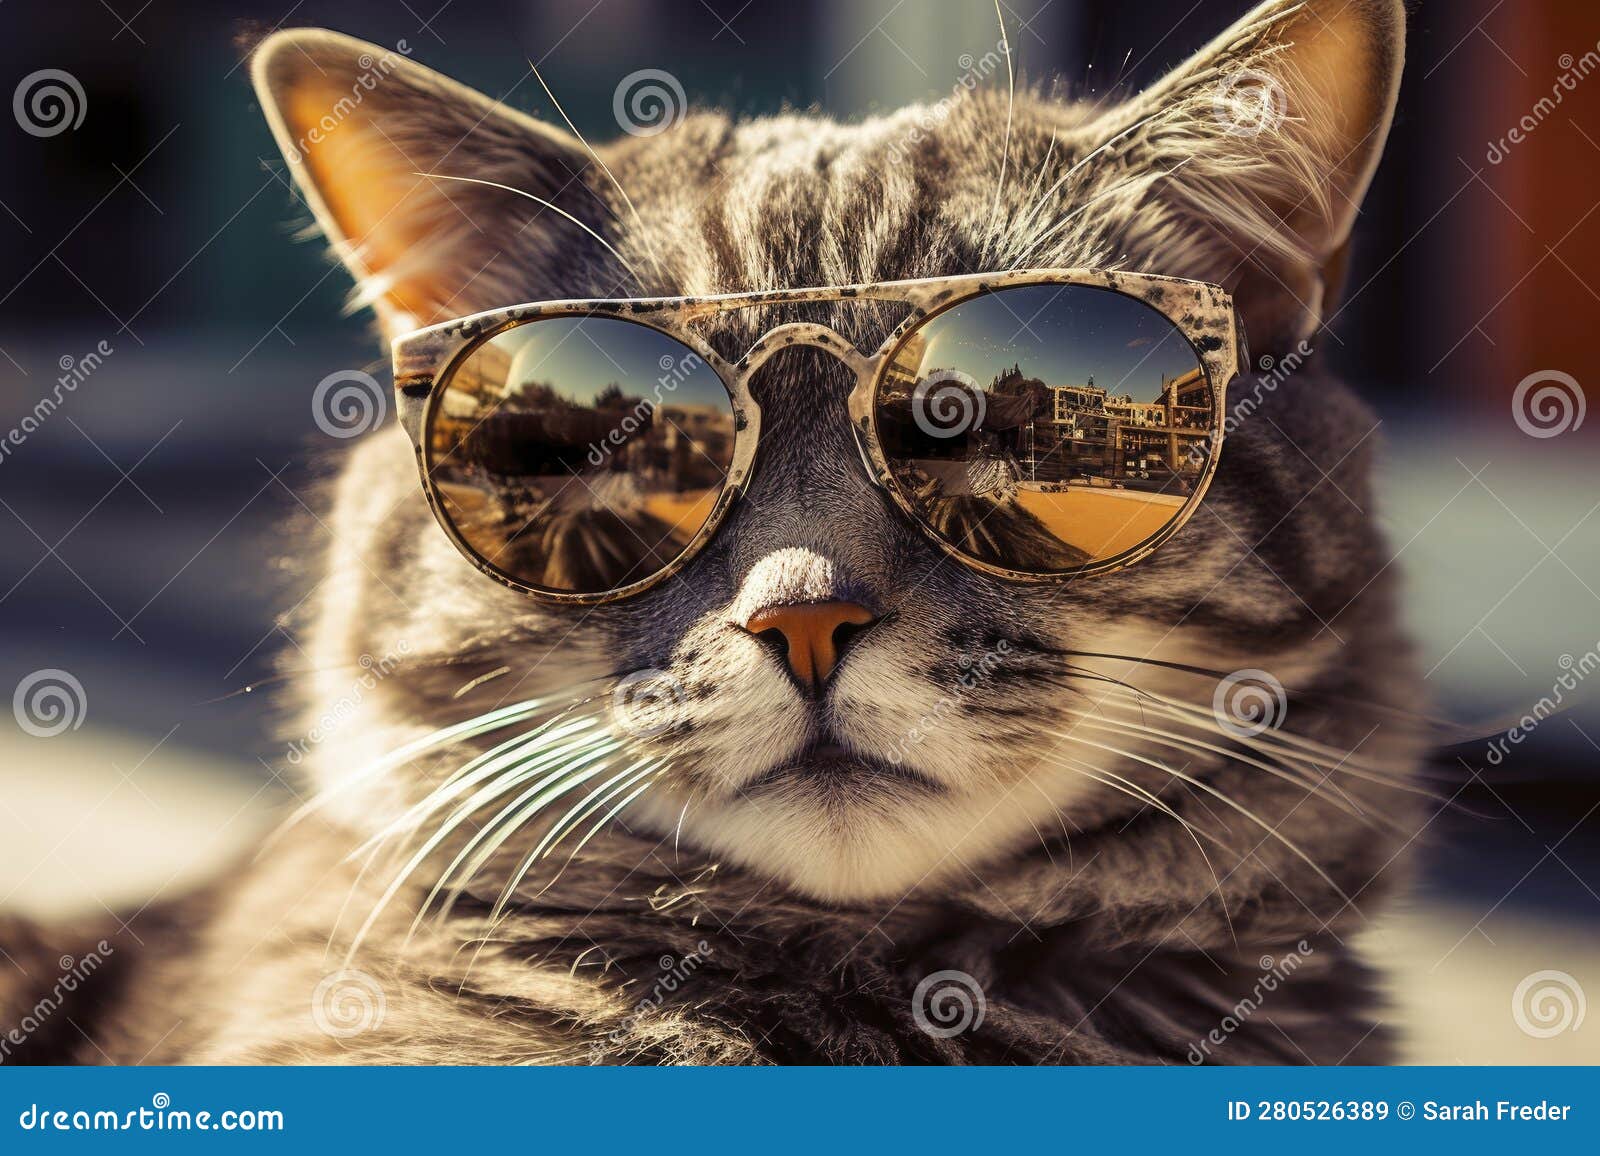 meow magic: captivating cuteness in cat ai form